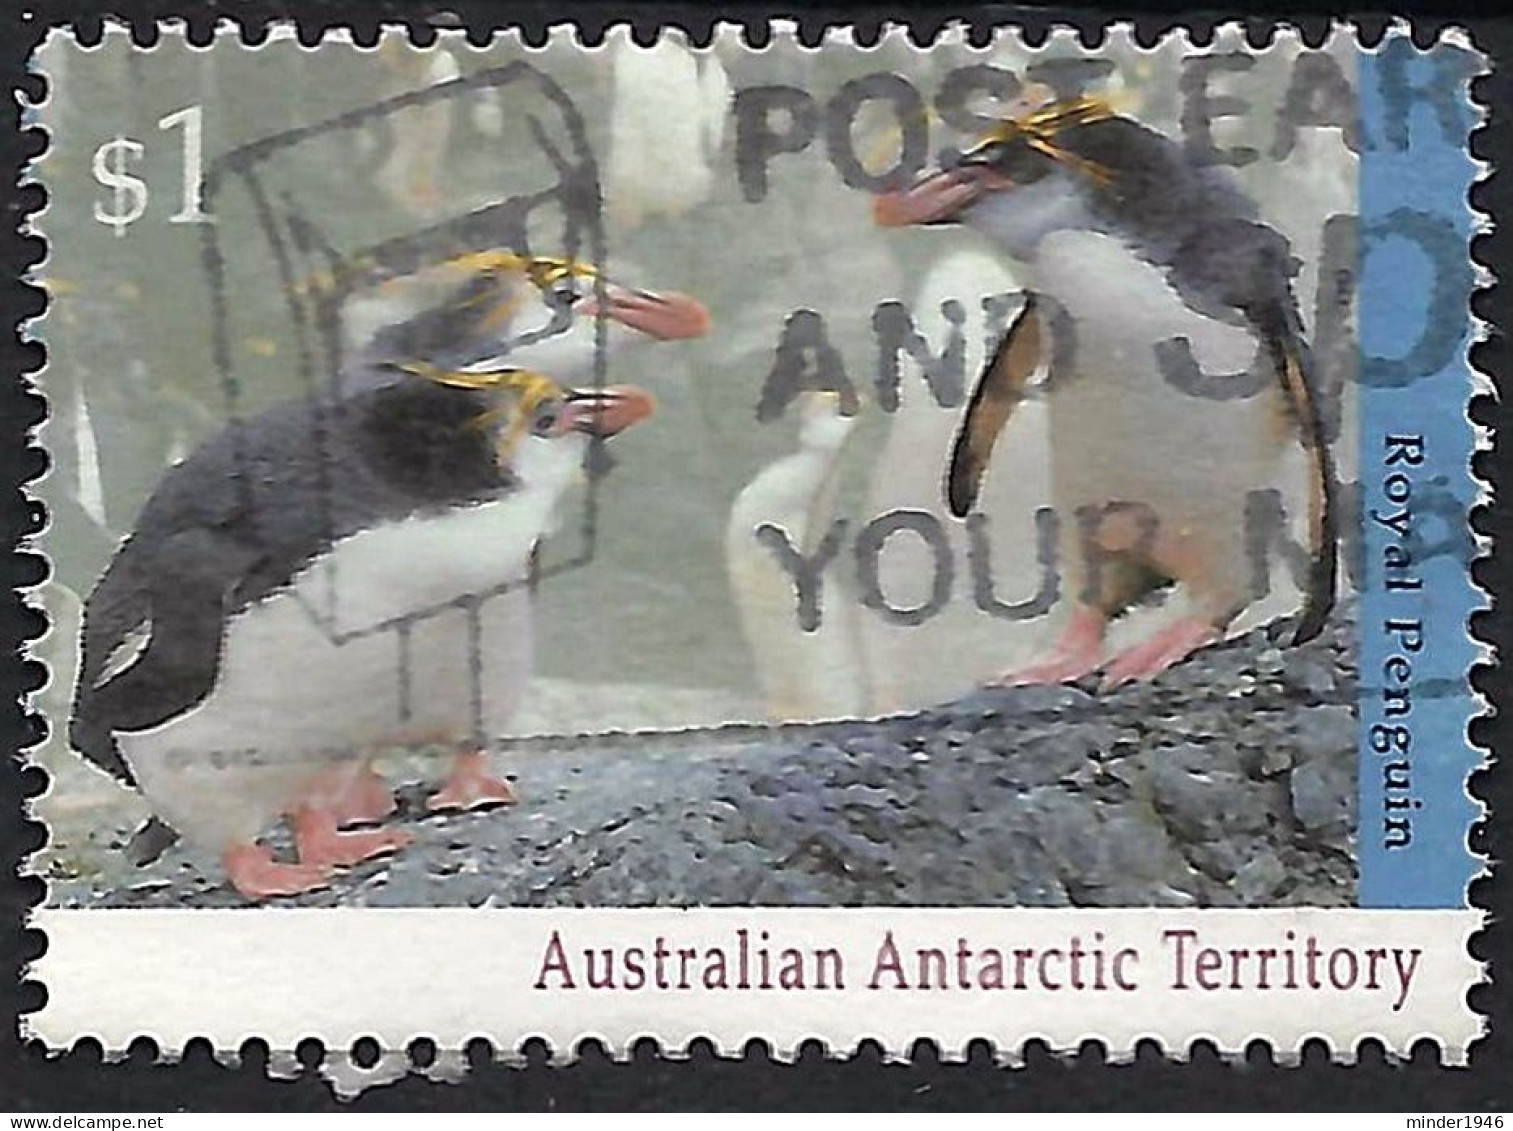 AUSTRALIAN ANTARCTIC TERRITORY (AAT) 1992 QEII $1 Multicoloured, Wildlife-Royal Penguin SG94 Used - Gebraucht